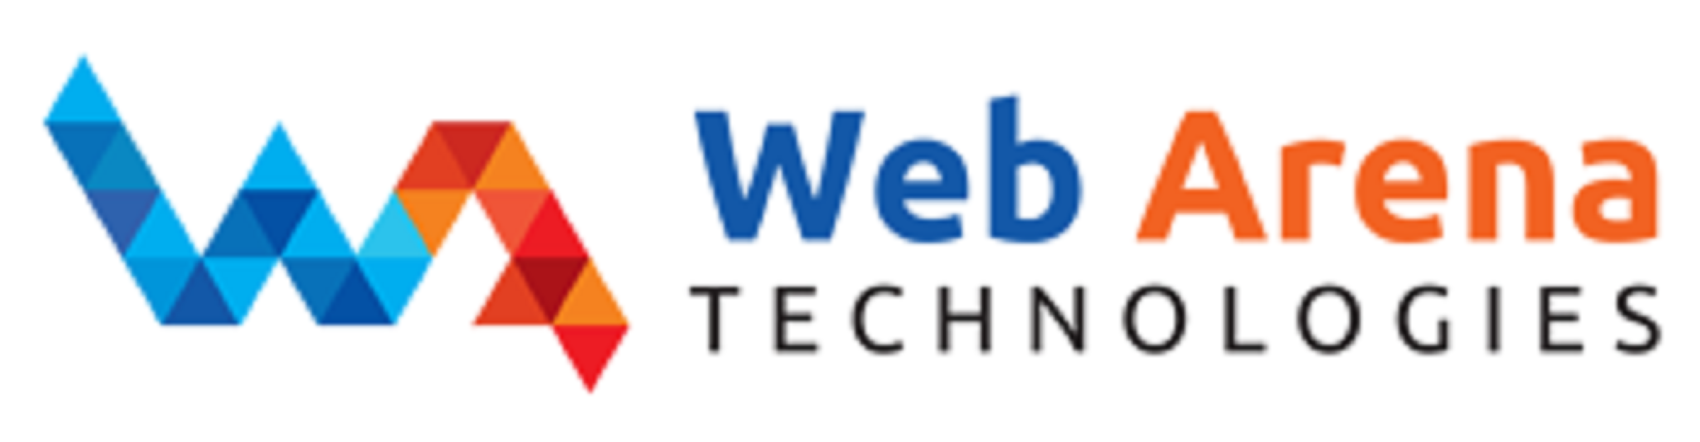 Web arena technology logo